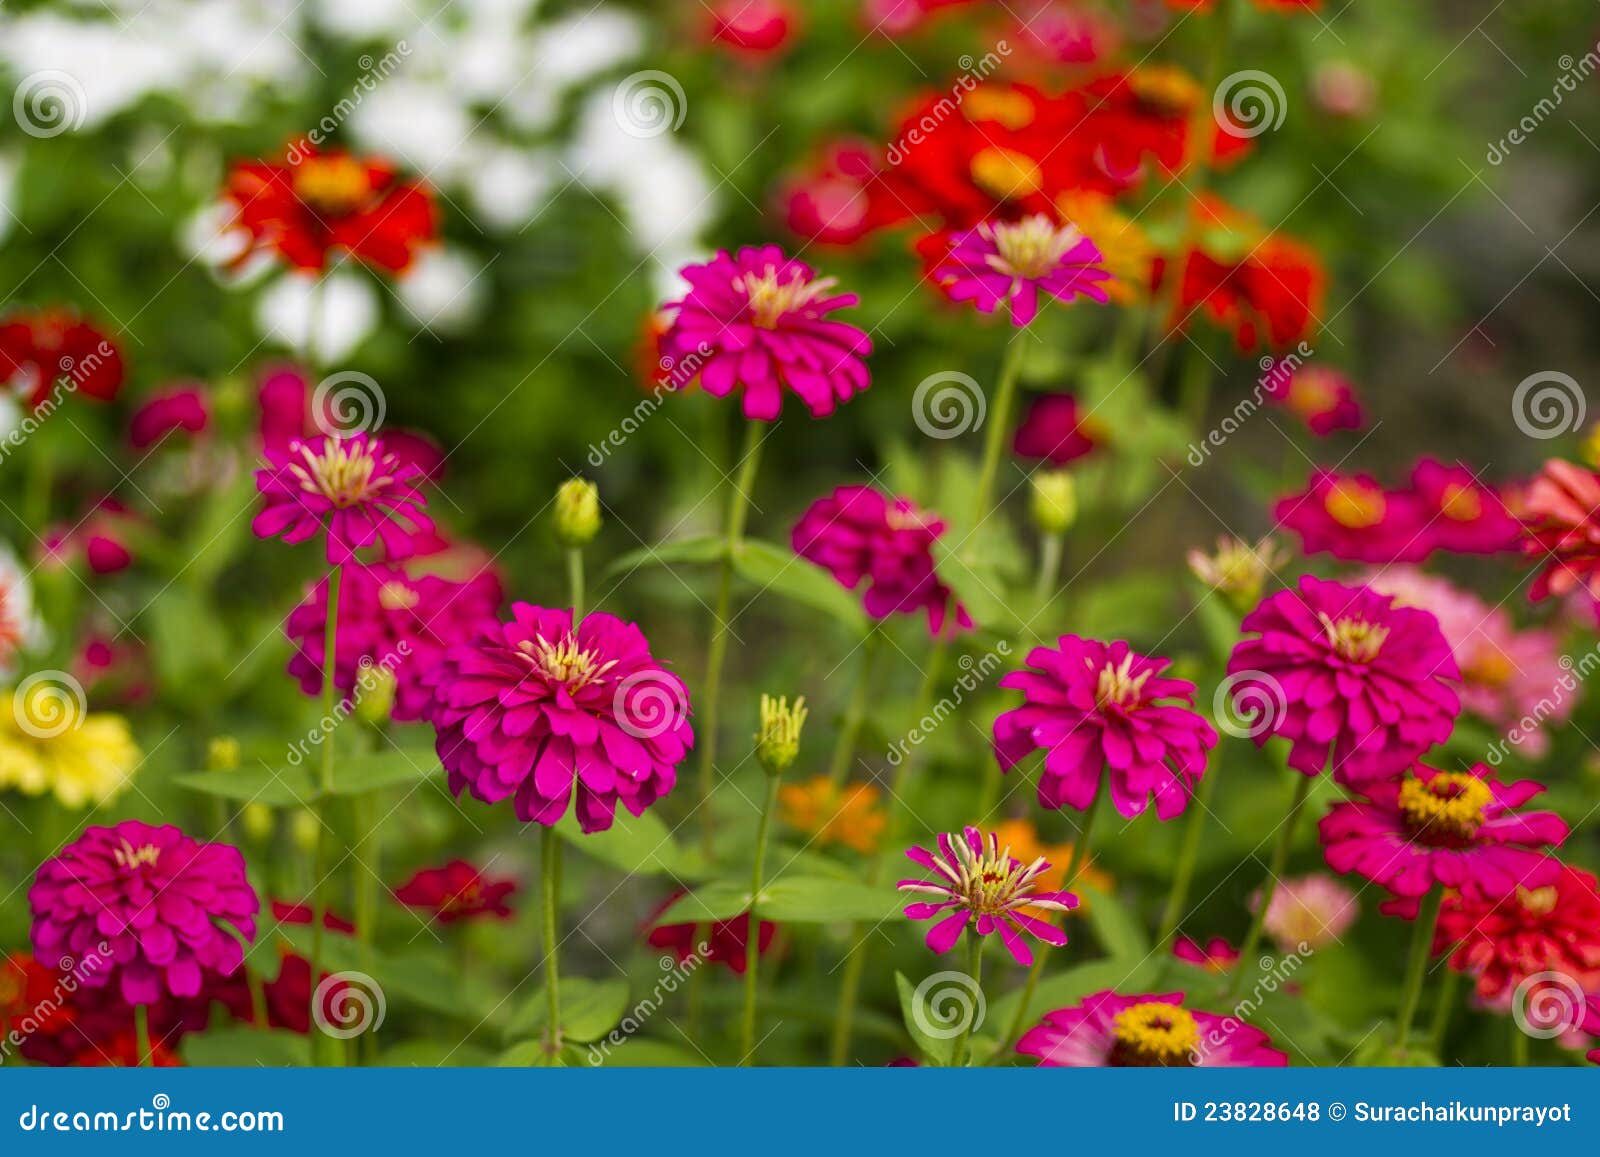 zinnia flowers